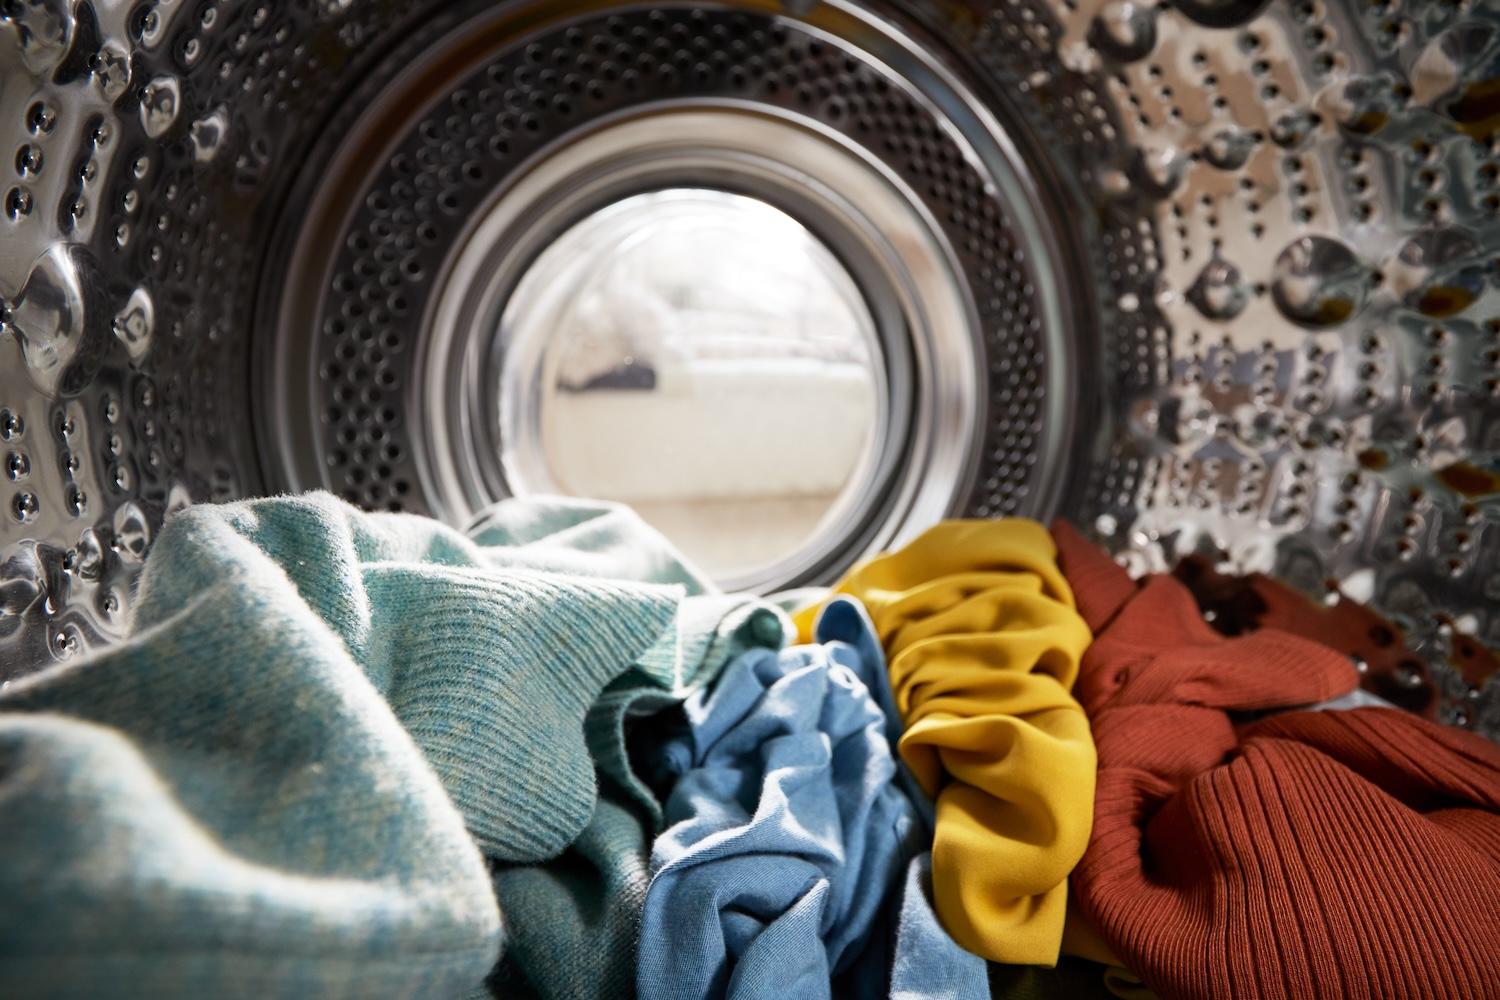 clothes inside a washing machine